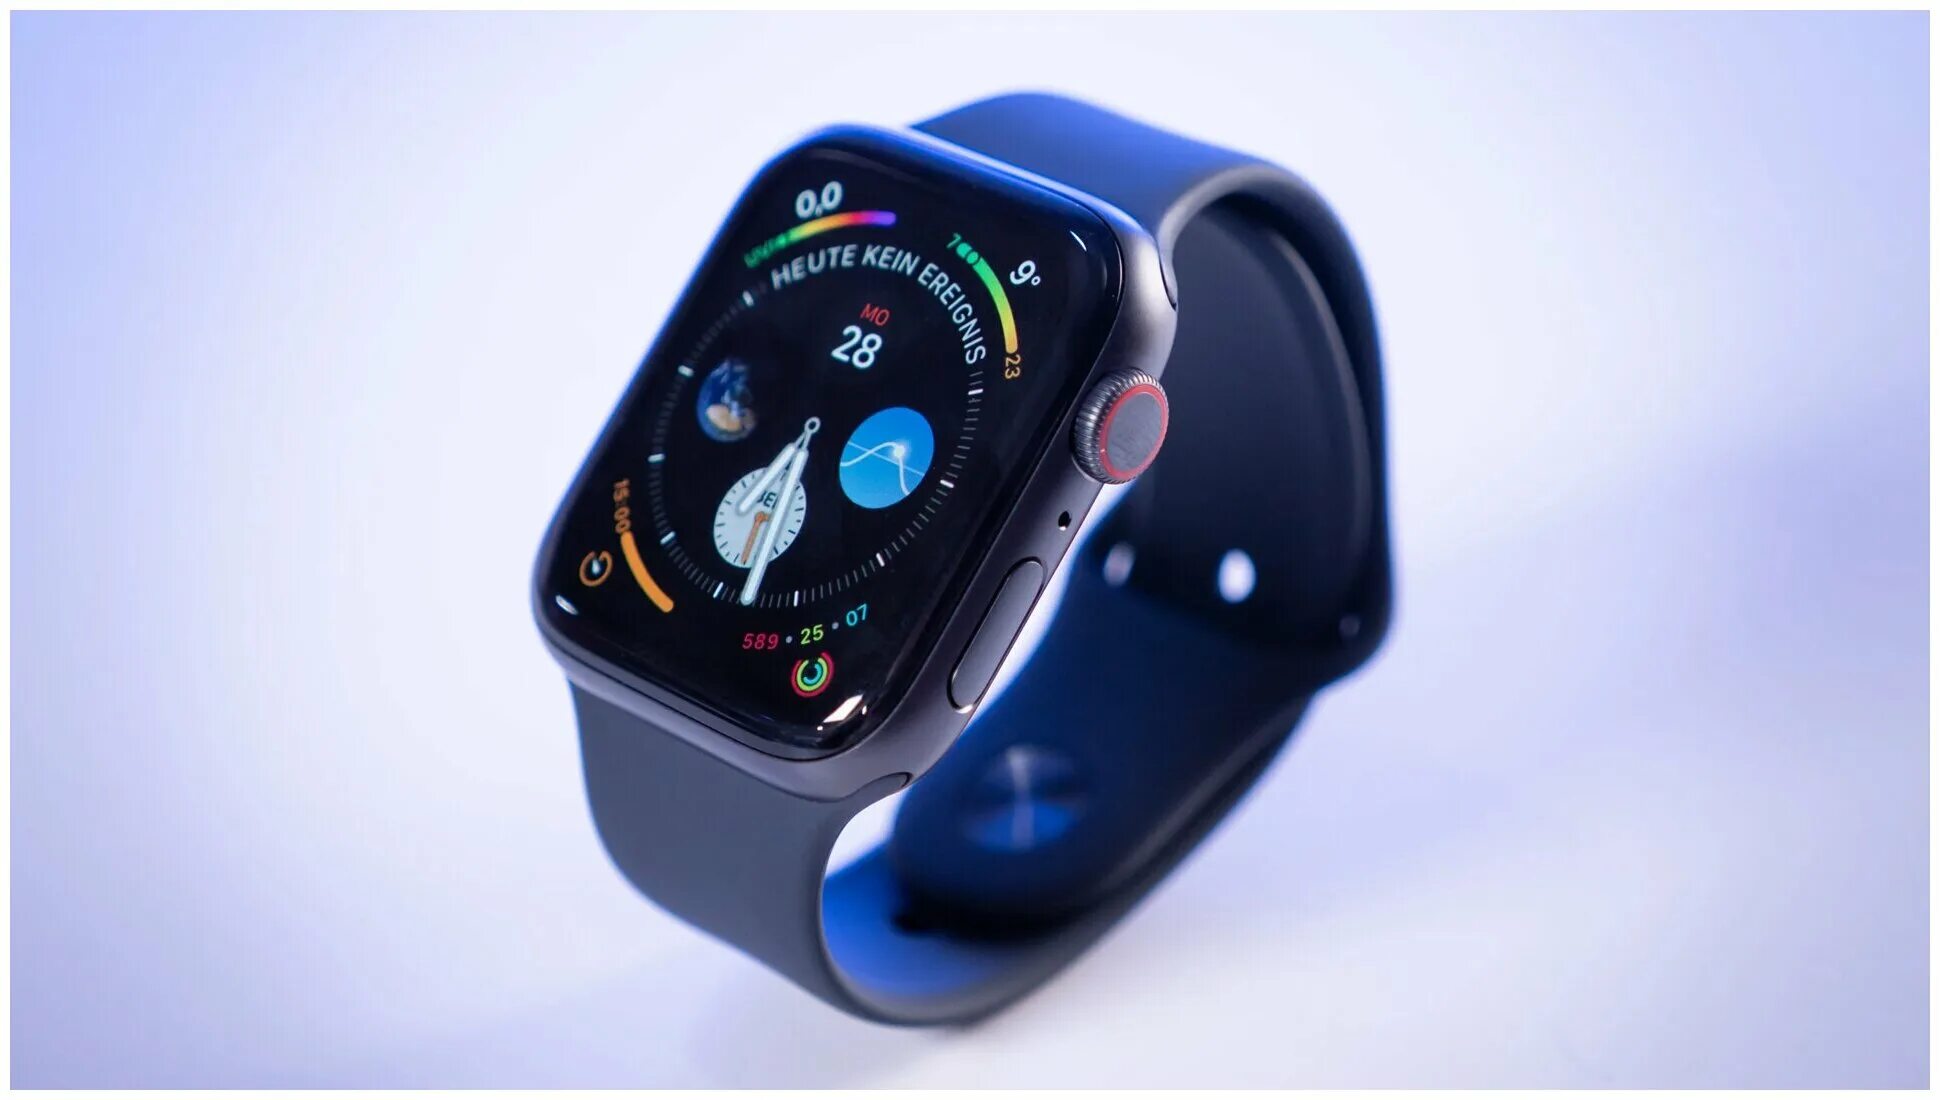 New watch 7. Смарт часы вотч 6. Apple watch Series 6. Смарт часы Аппле вотч 6. Apple watch 6 44 mm.